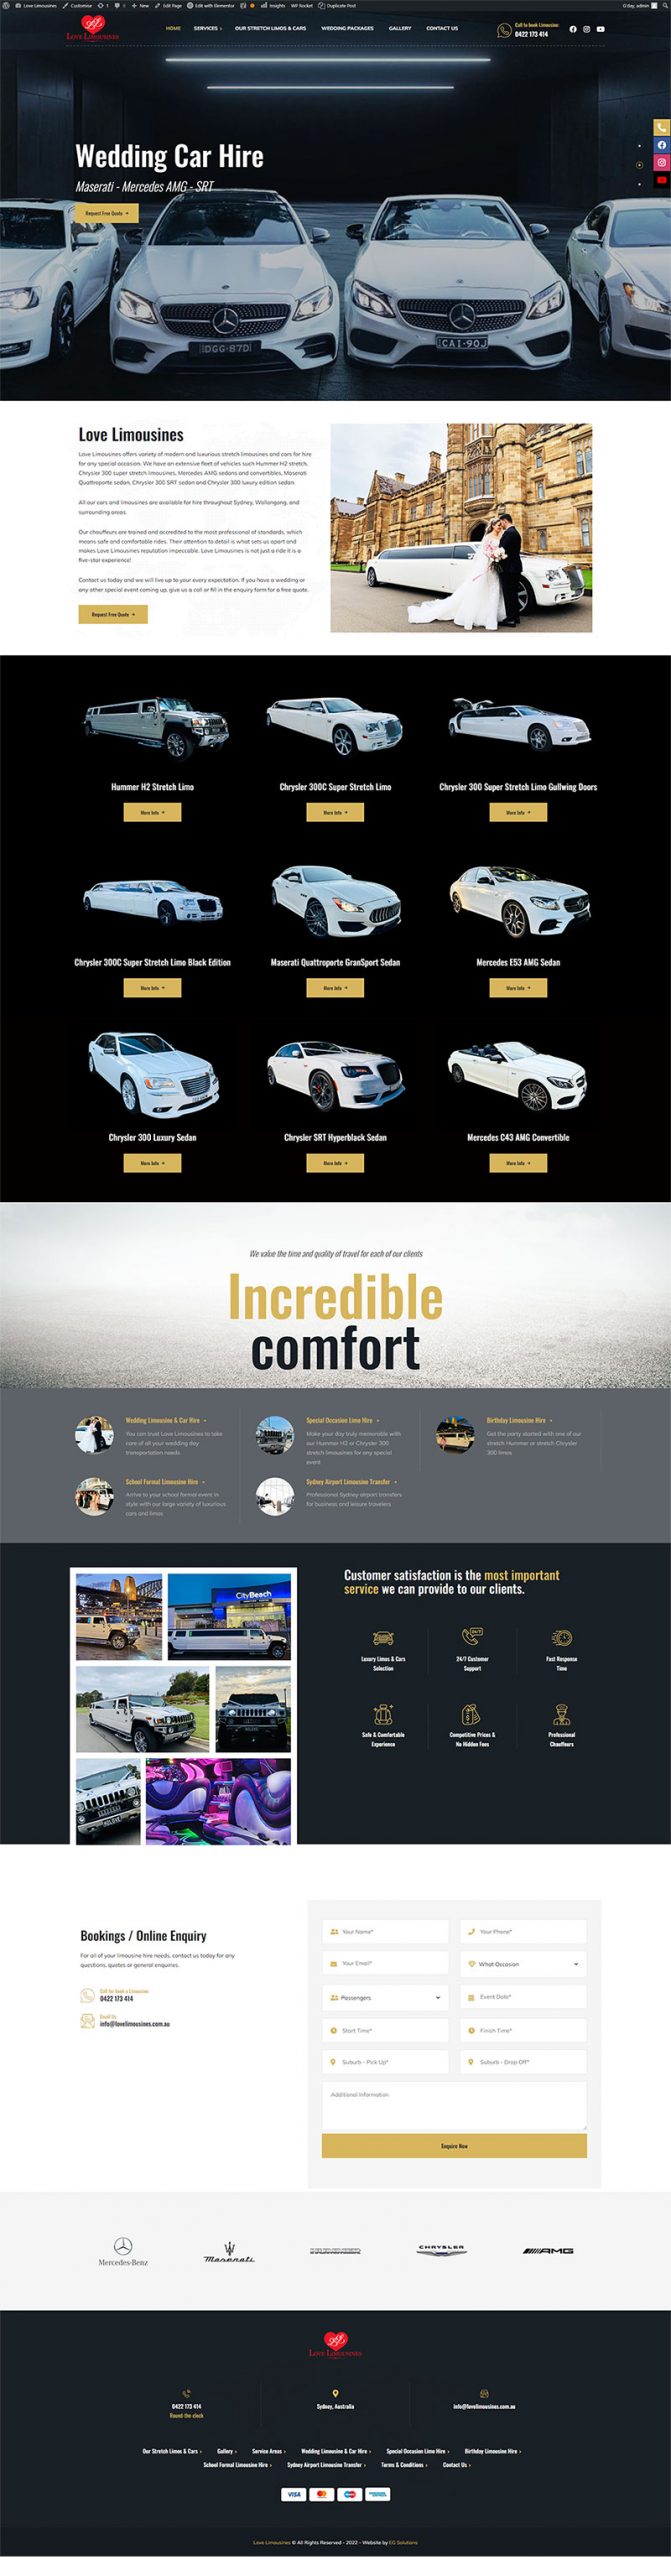 Love limousines Website - Homepage Design